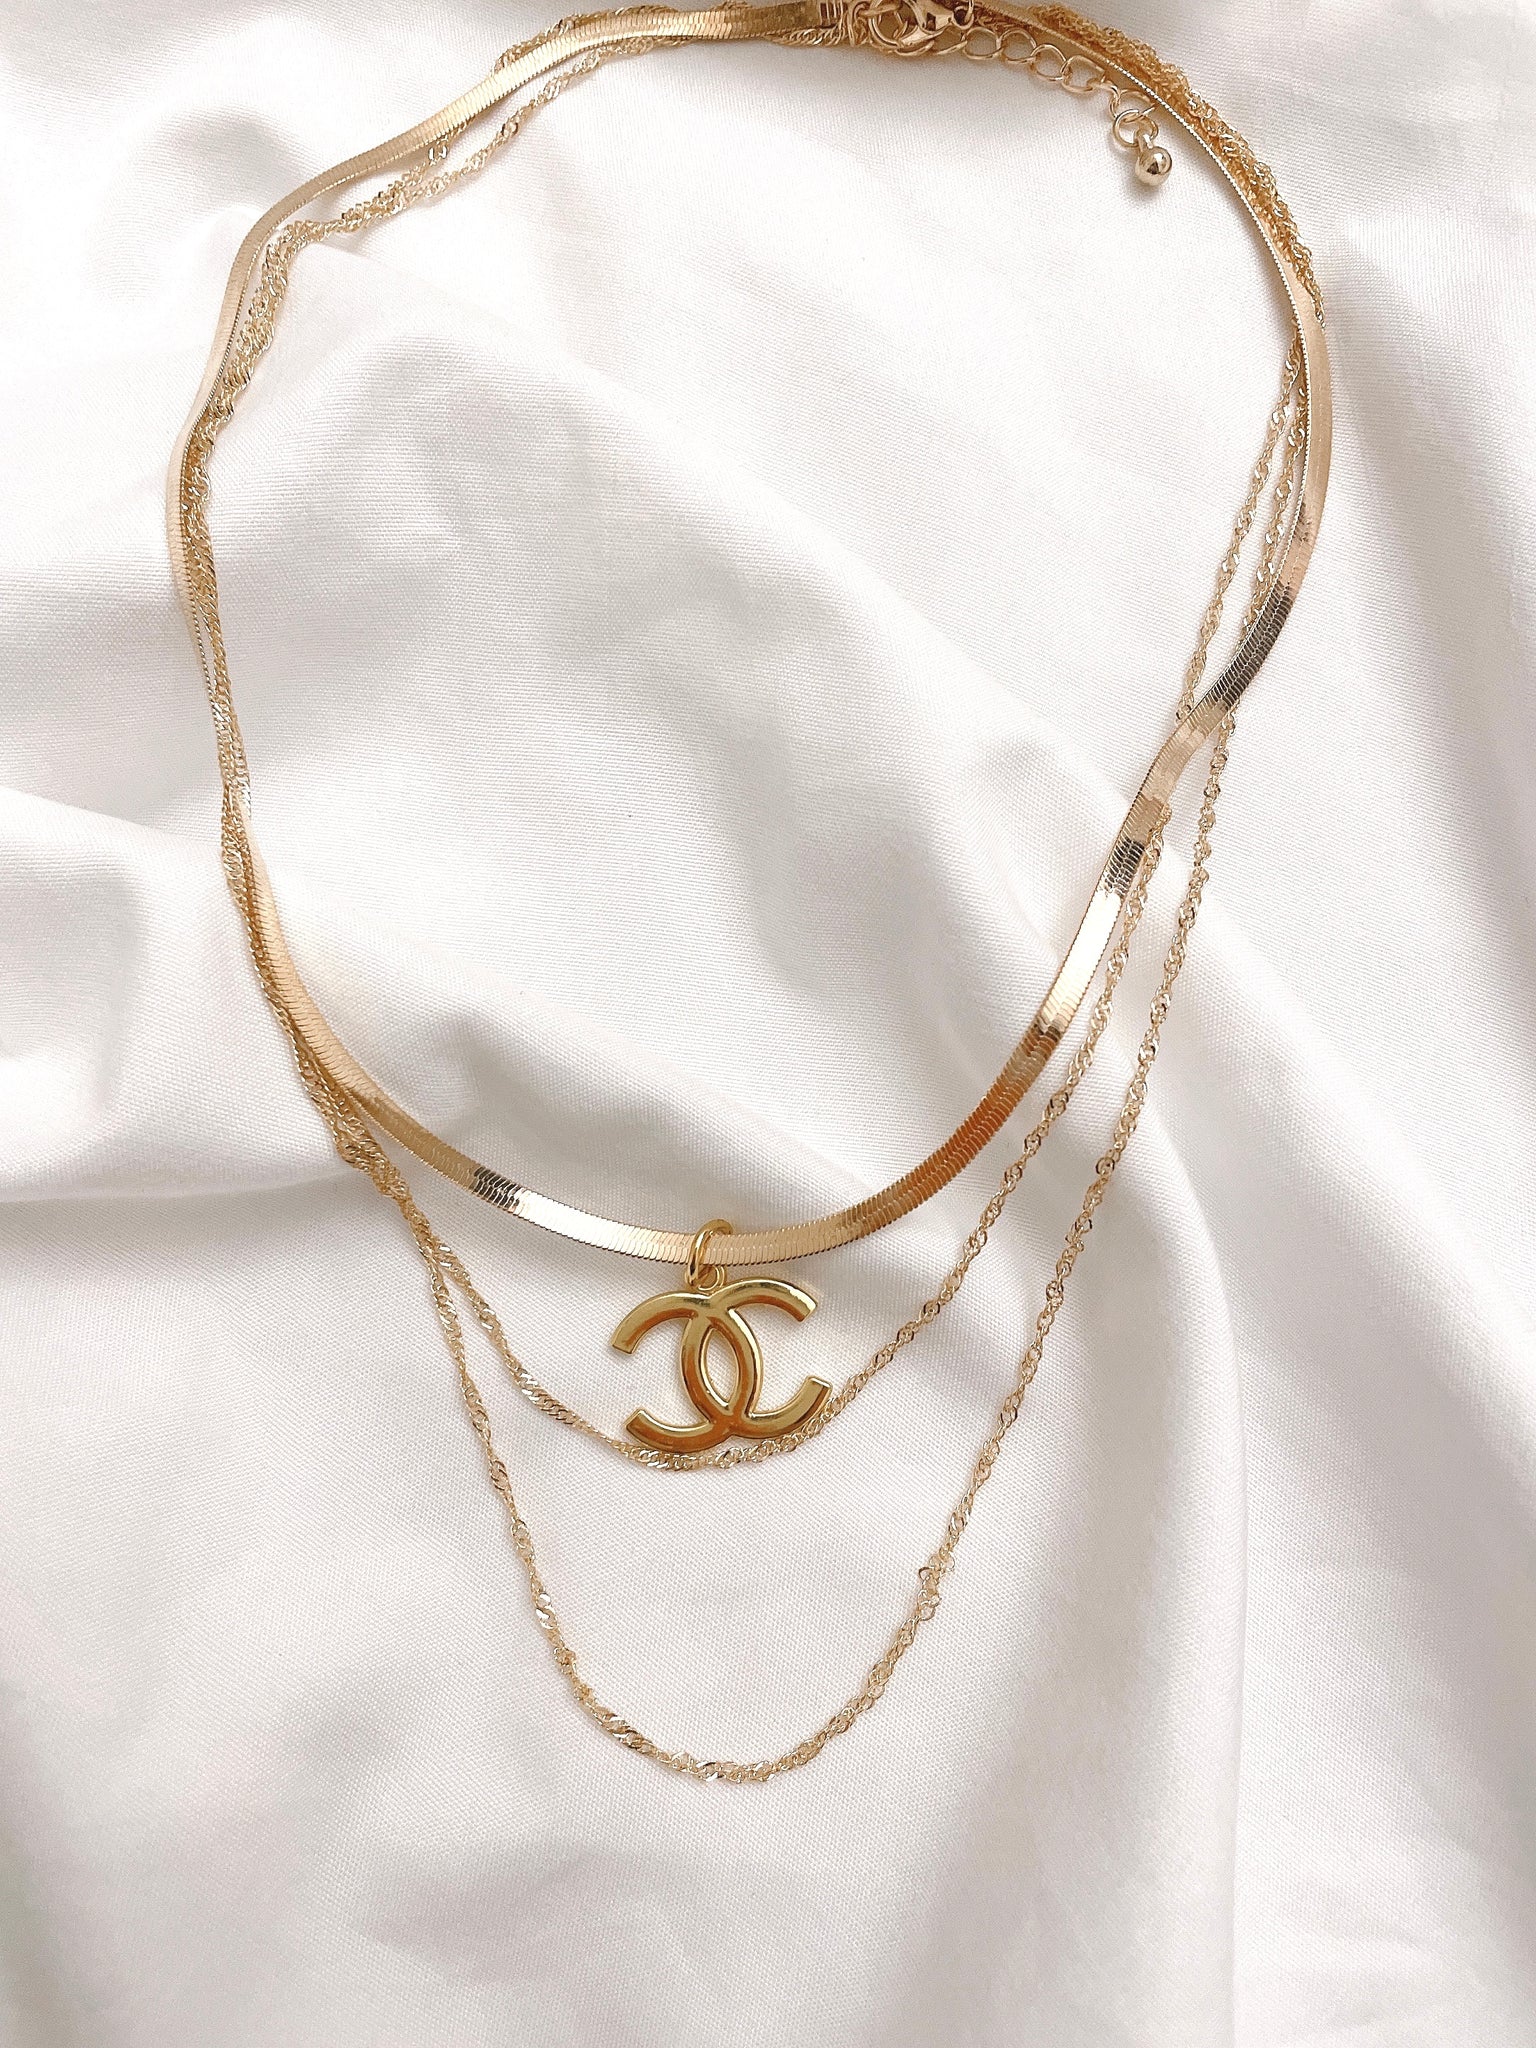 Repurposed Louis Vuitton Zipper Pull Necklace